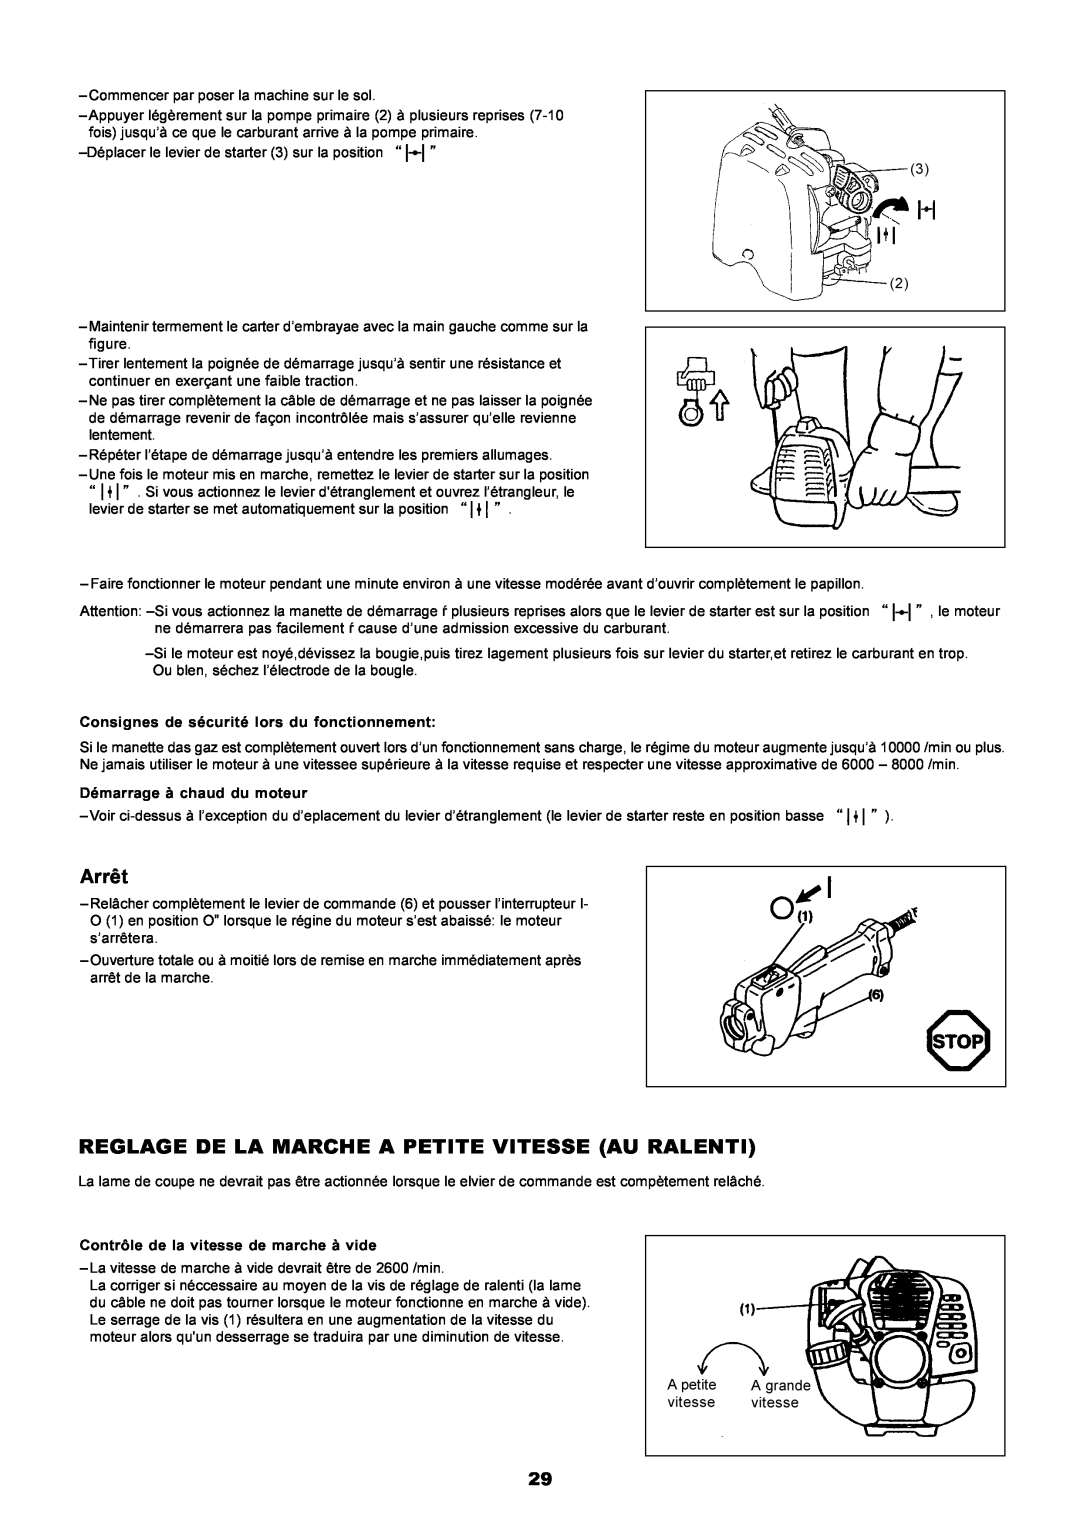 Dolmar PE-251 instruction manual Arrêt, Reglage De La Marche A Petite Vitesse Au Ralenti 